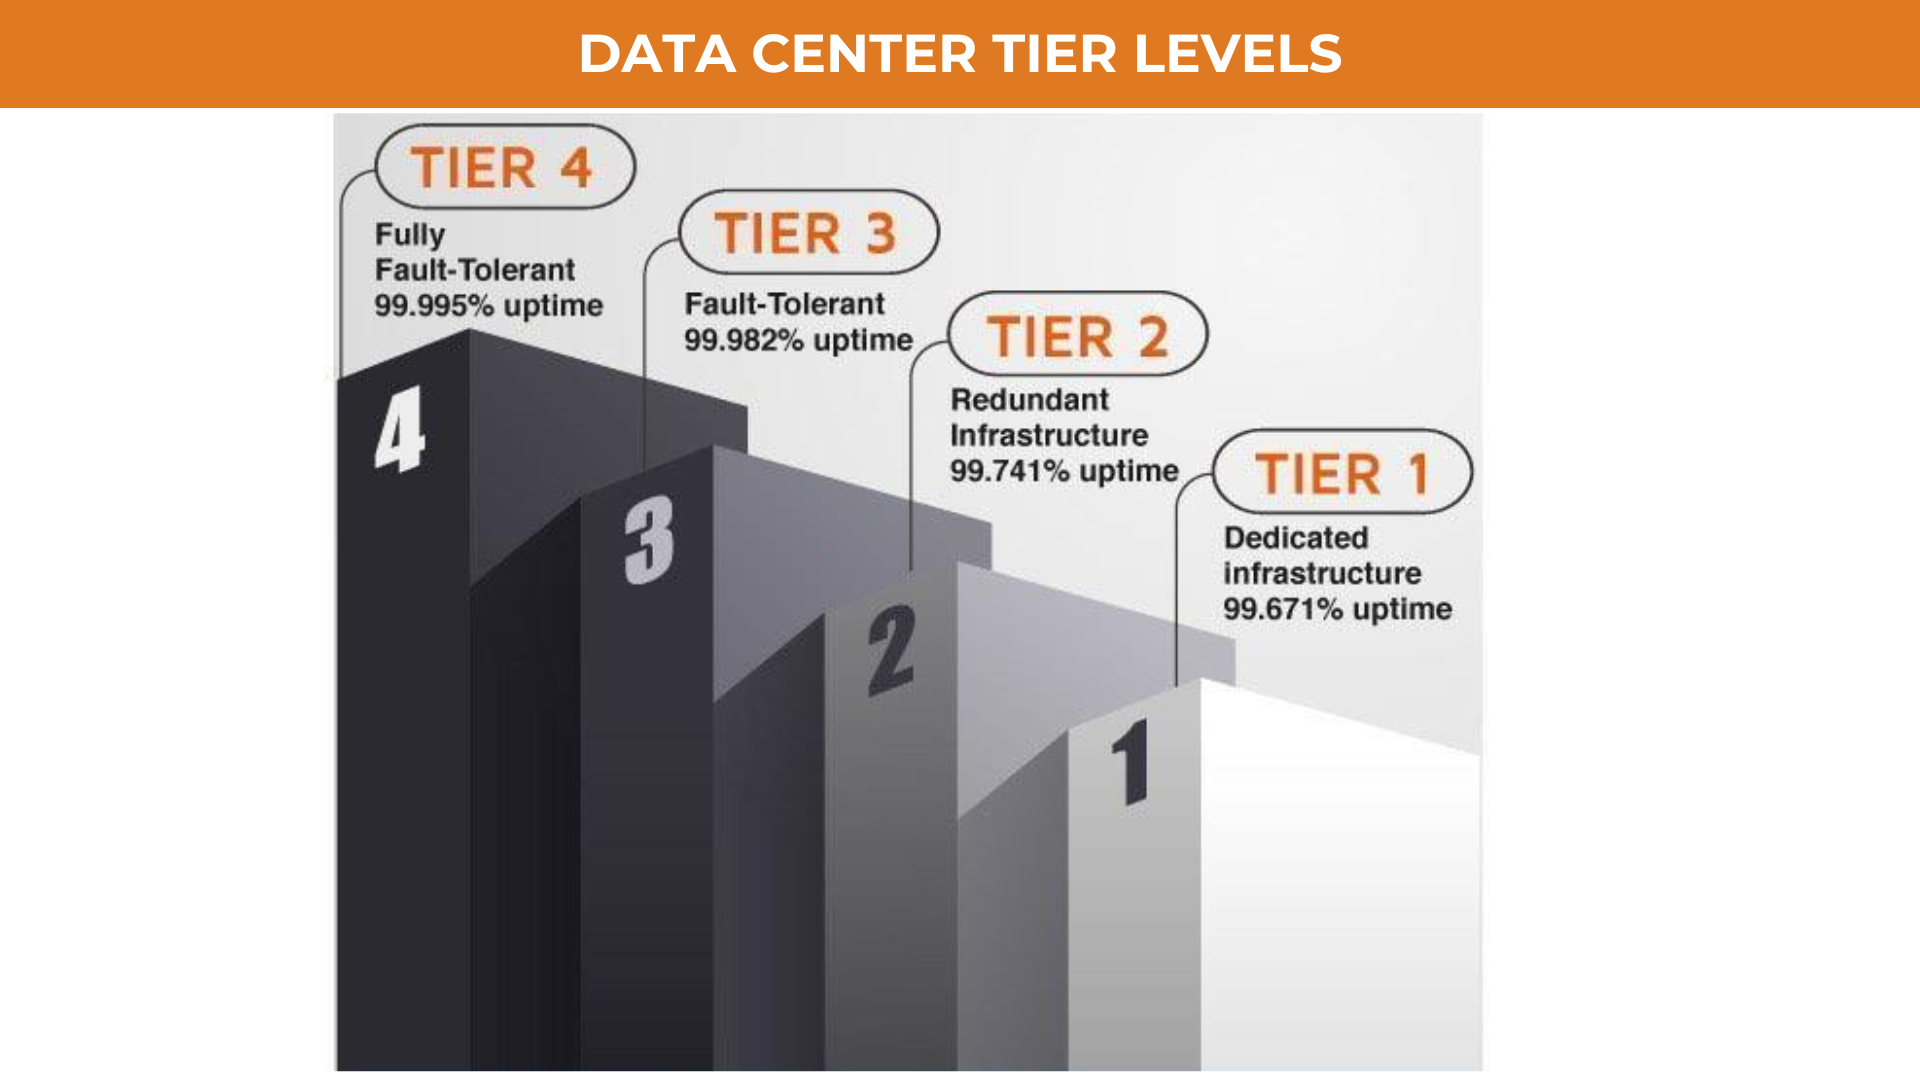 Data center tier 3